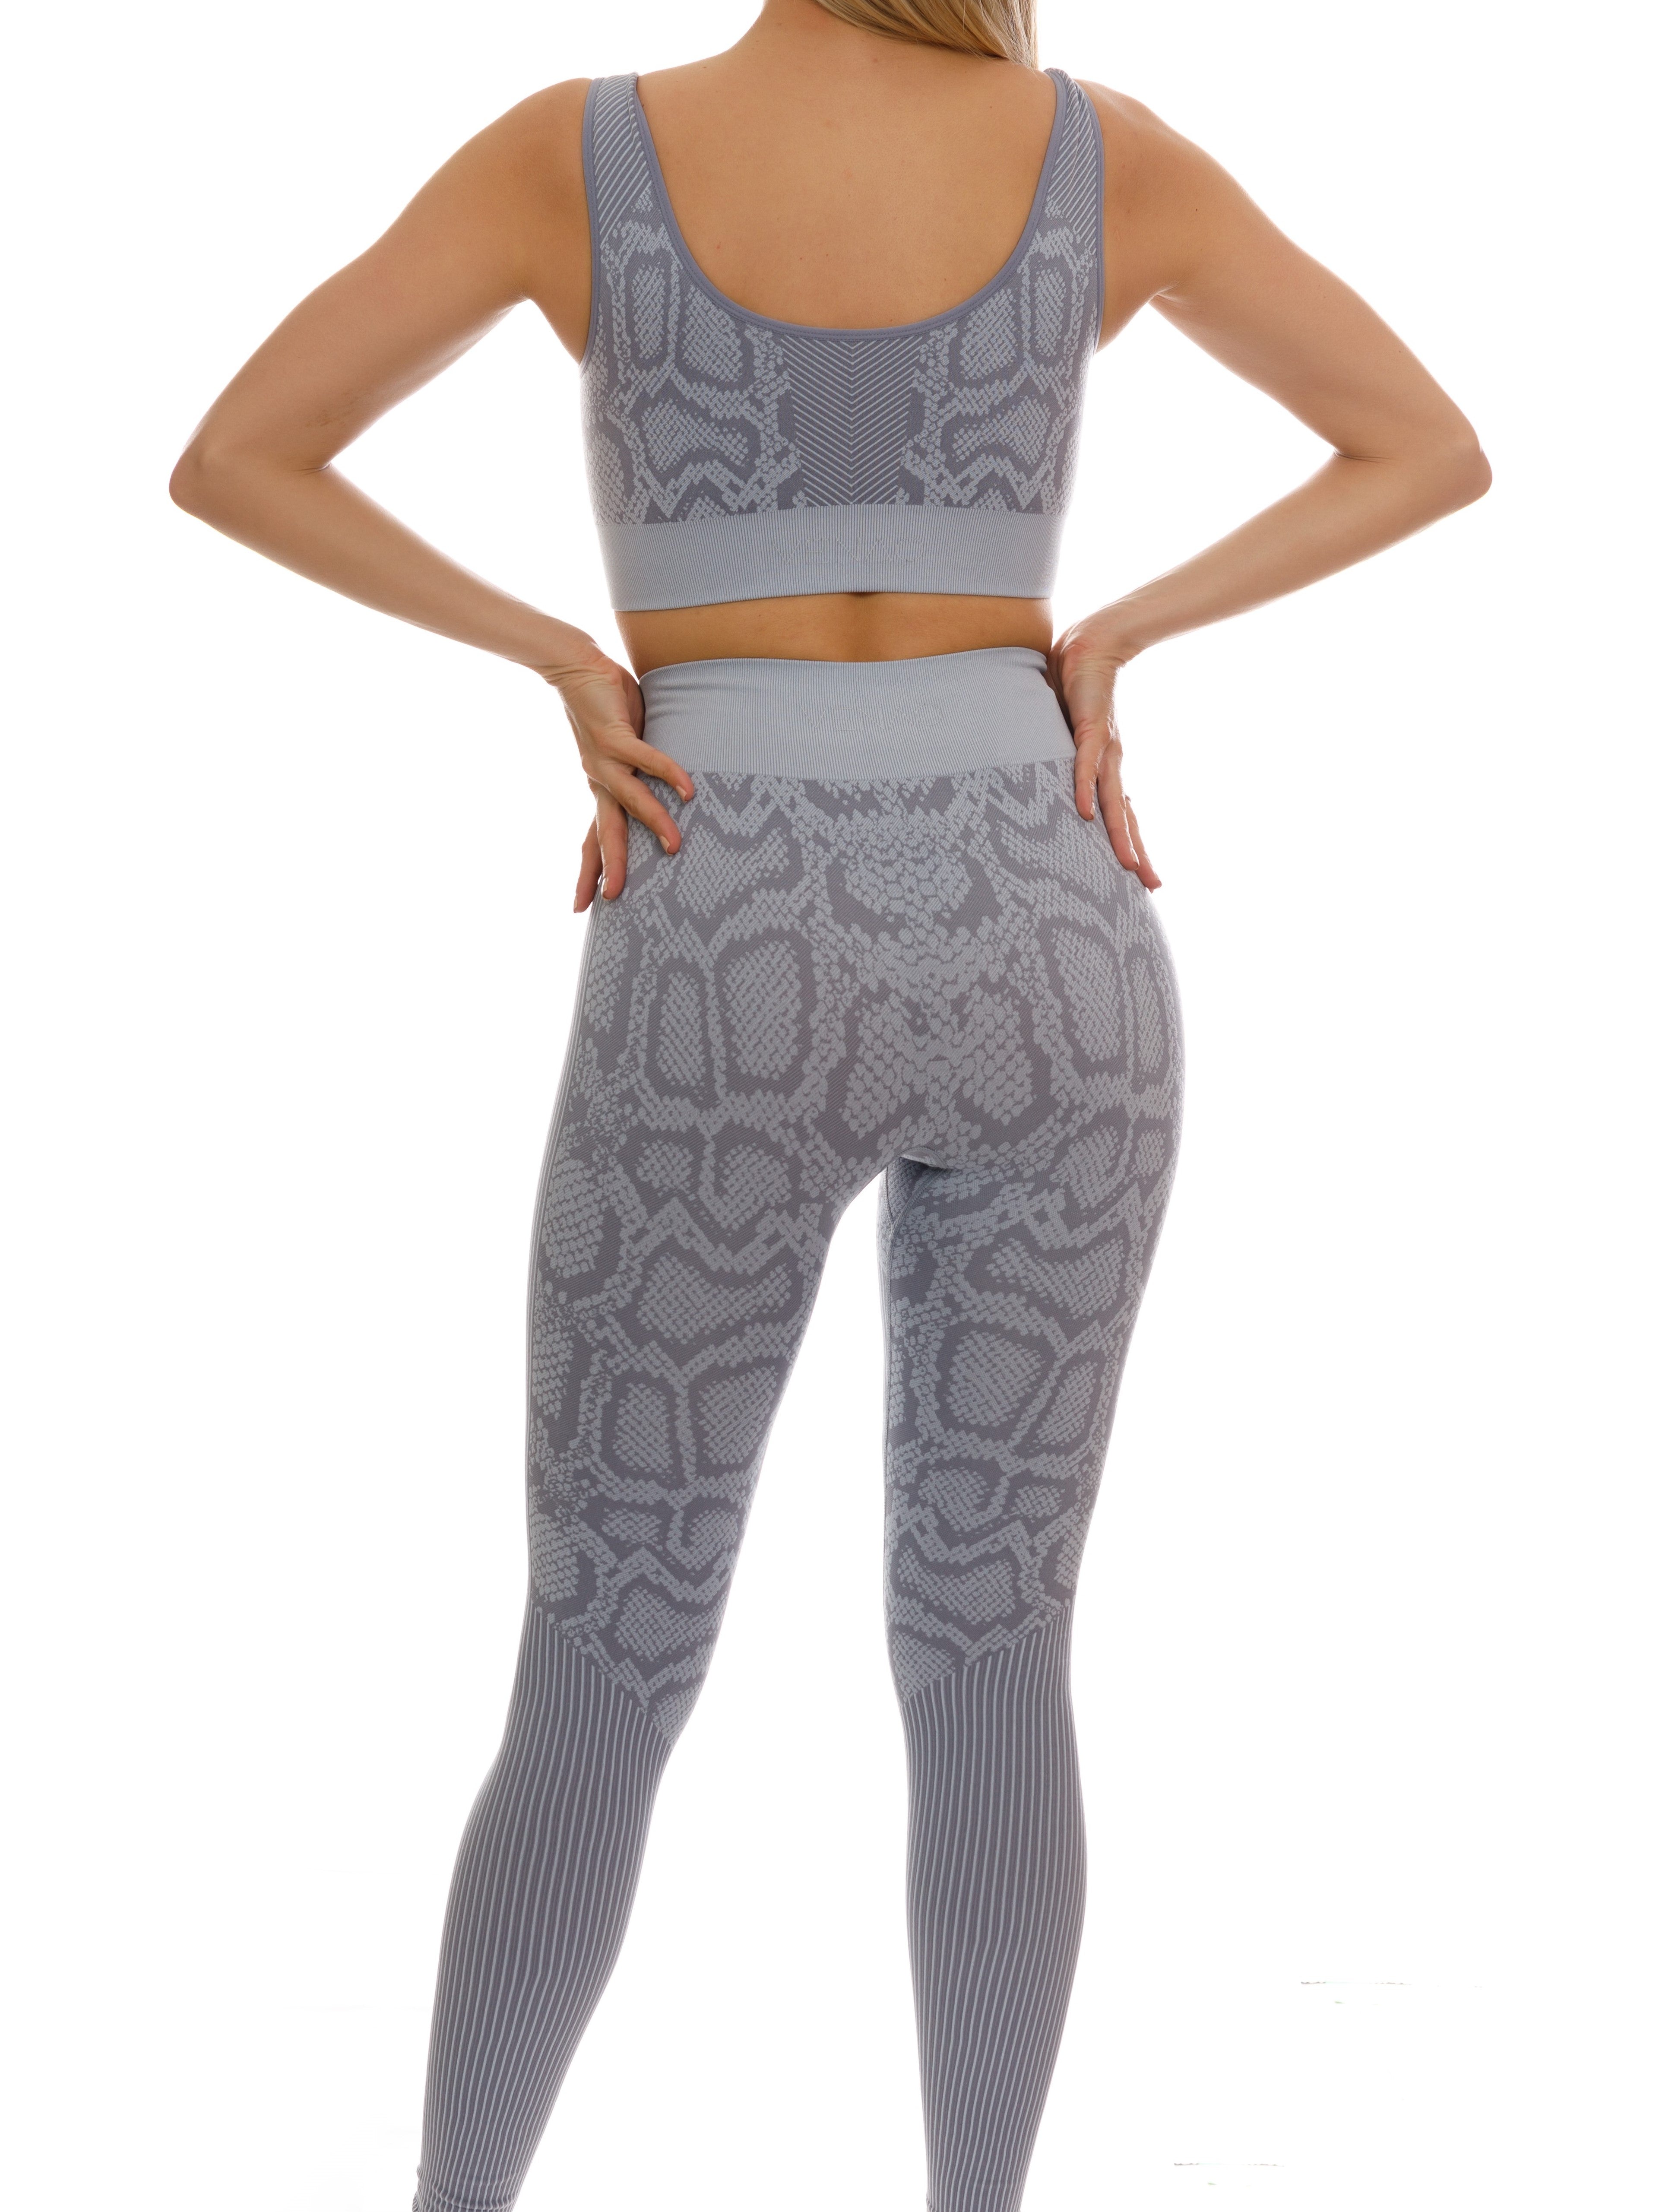 Snake Skin Print Fitness Set  Yoga suit, Sports bra and leggings, Yoga set